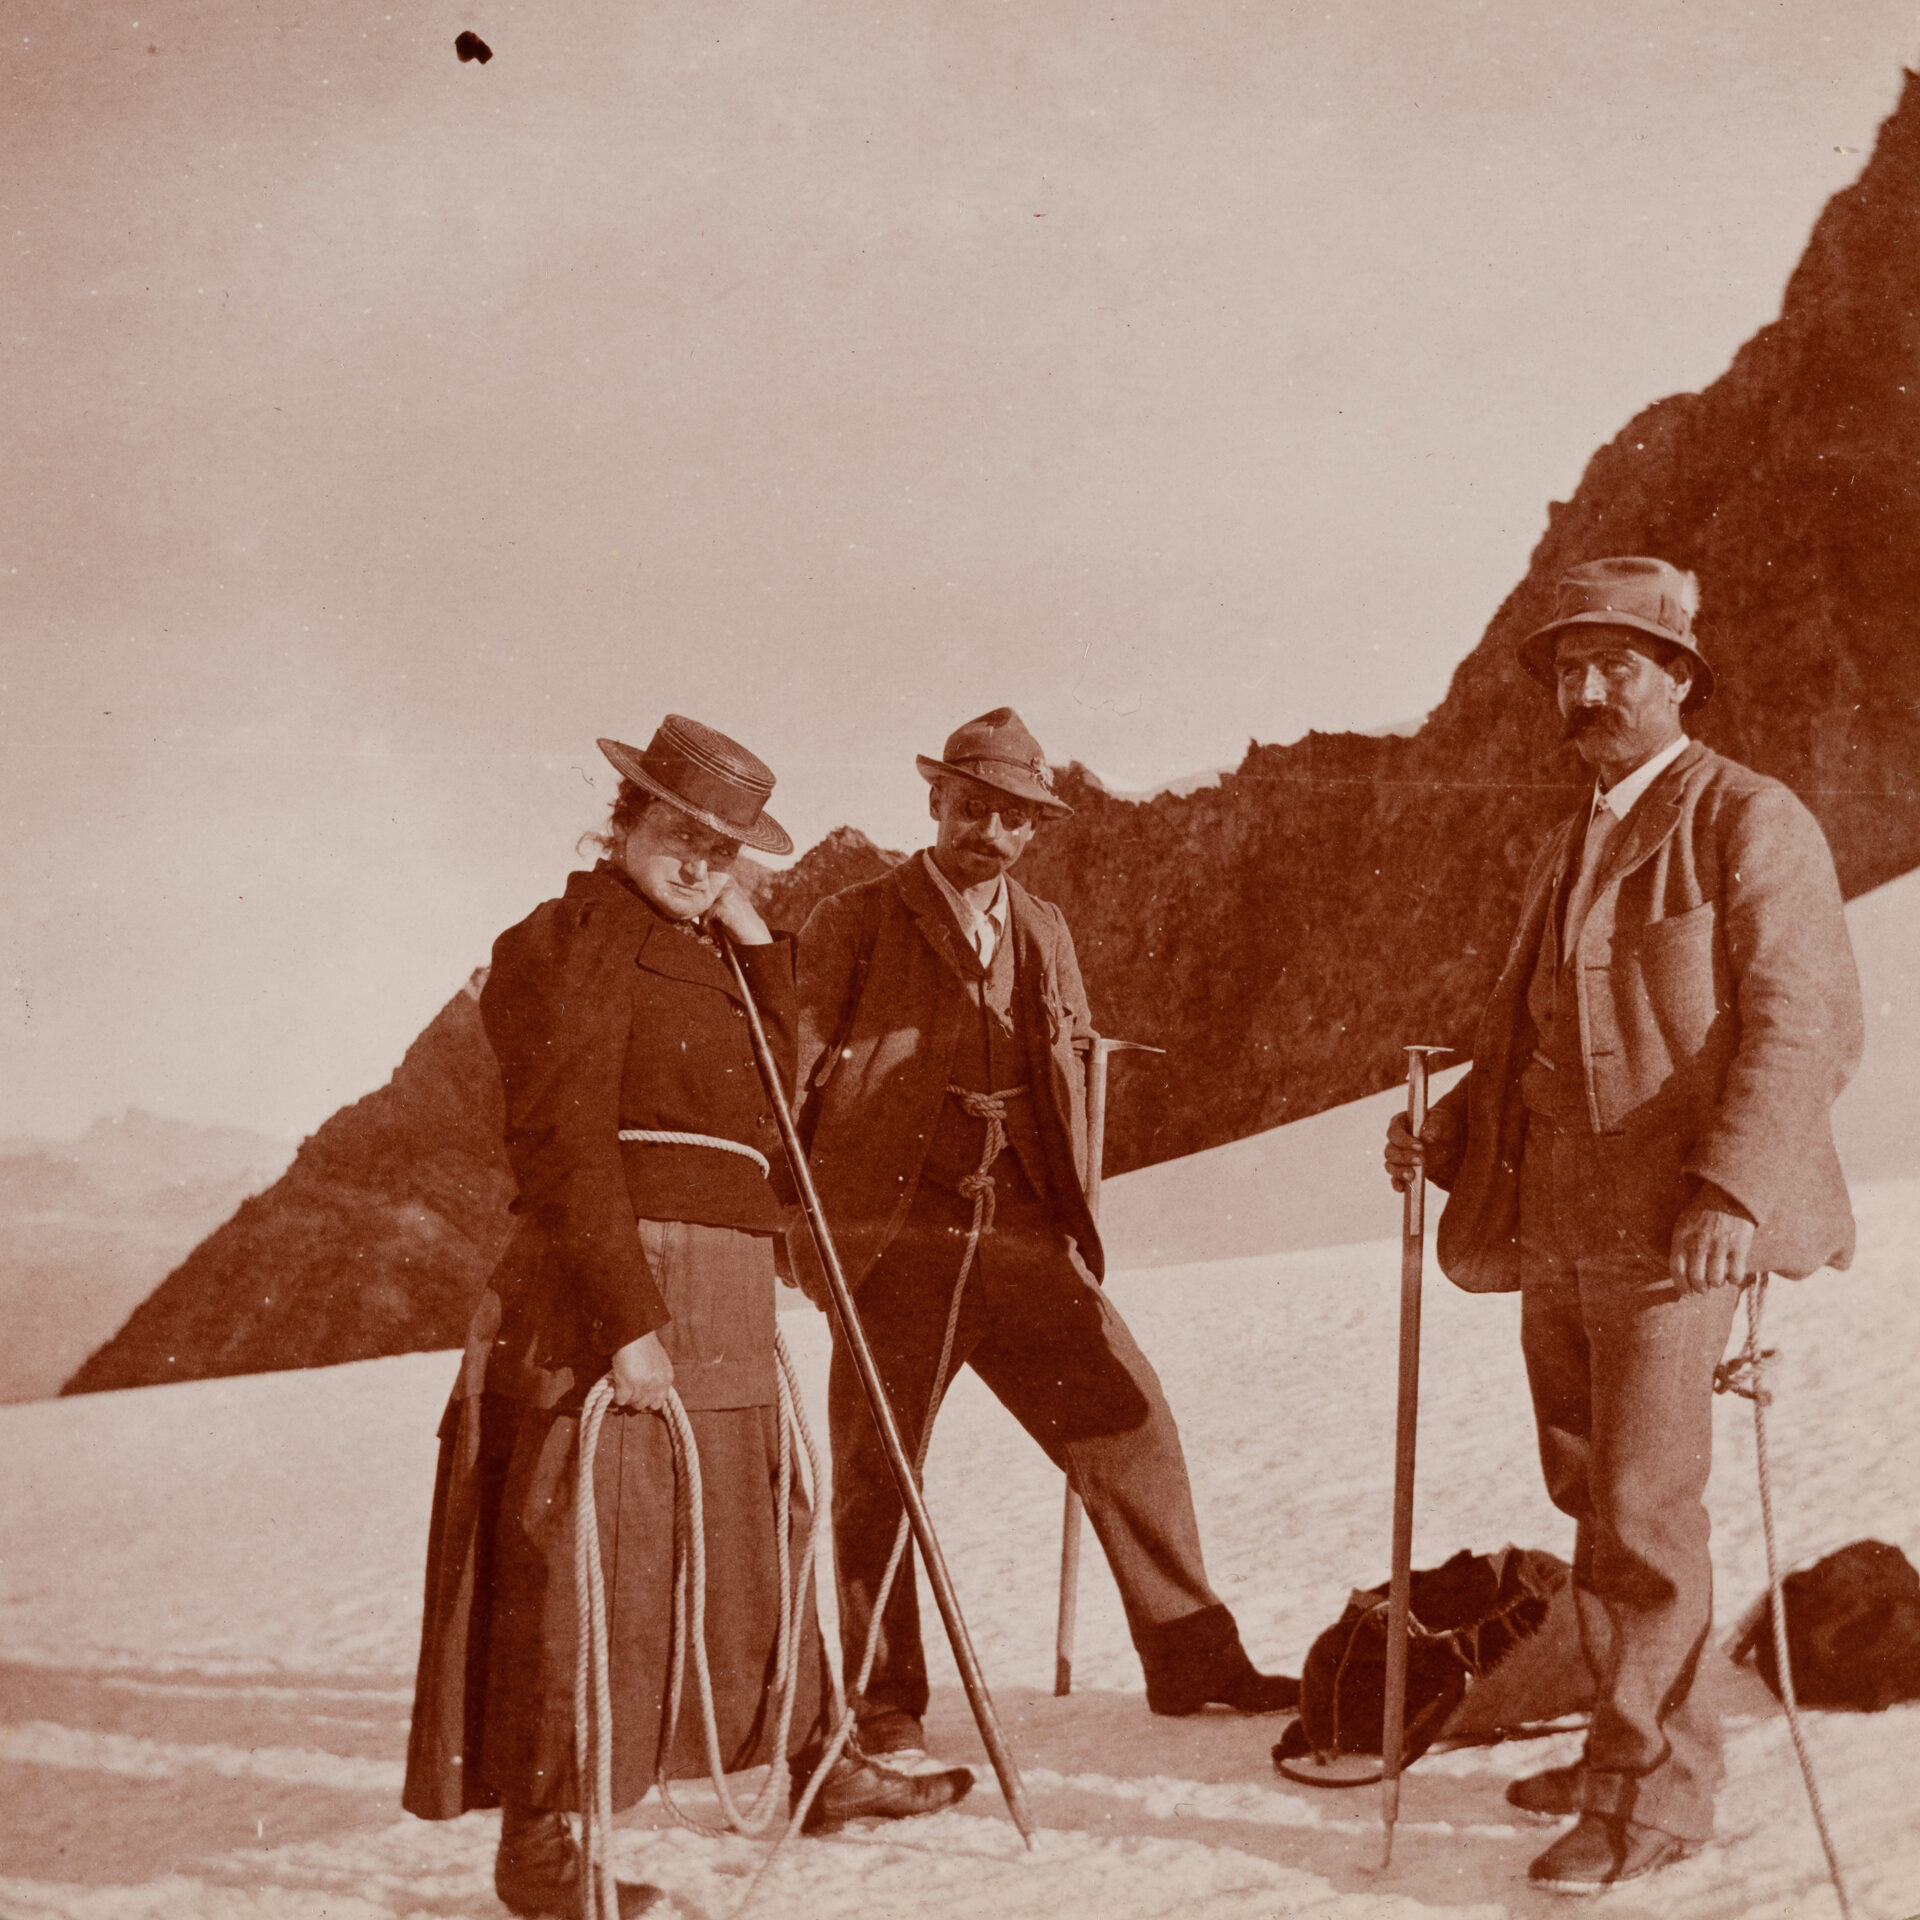 Unbekannter Fotograf, aus dem Fotoalbum der Bergtour im Oberengadin, 1898